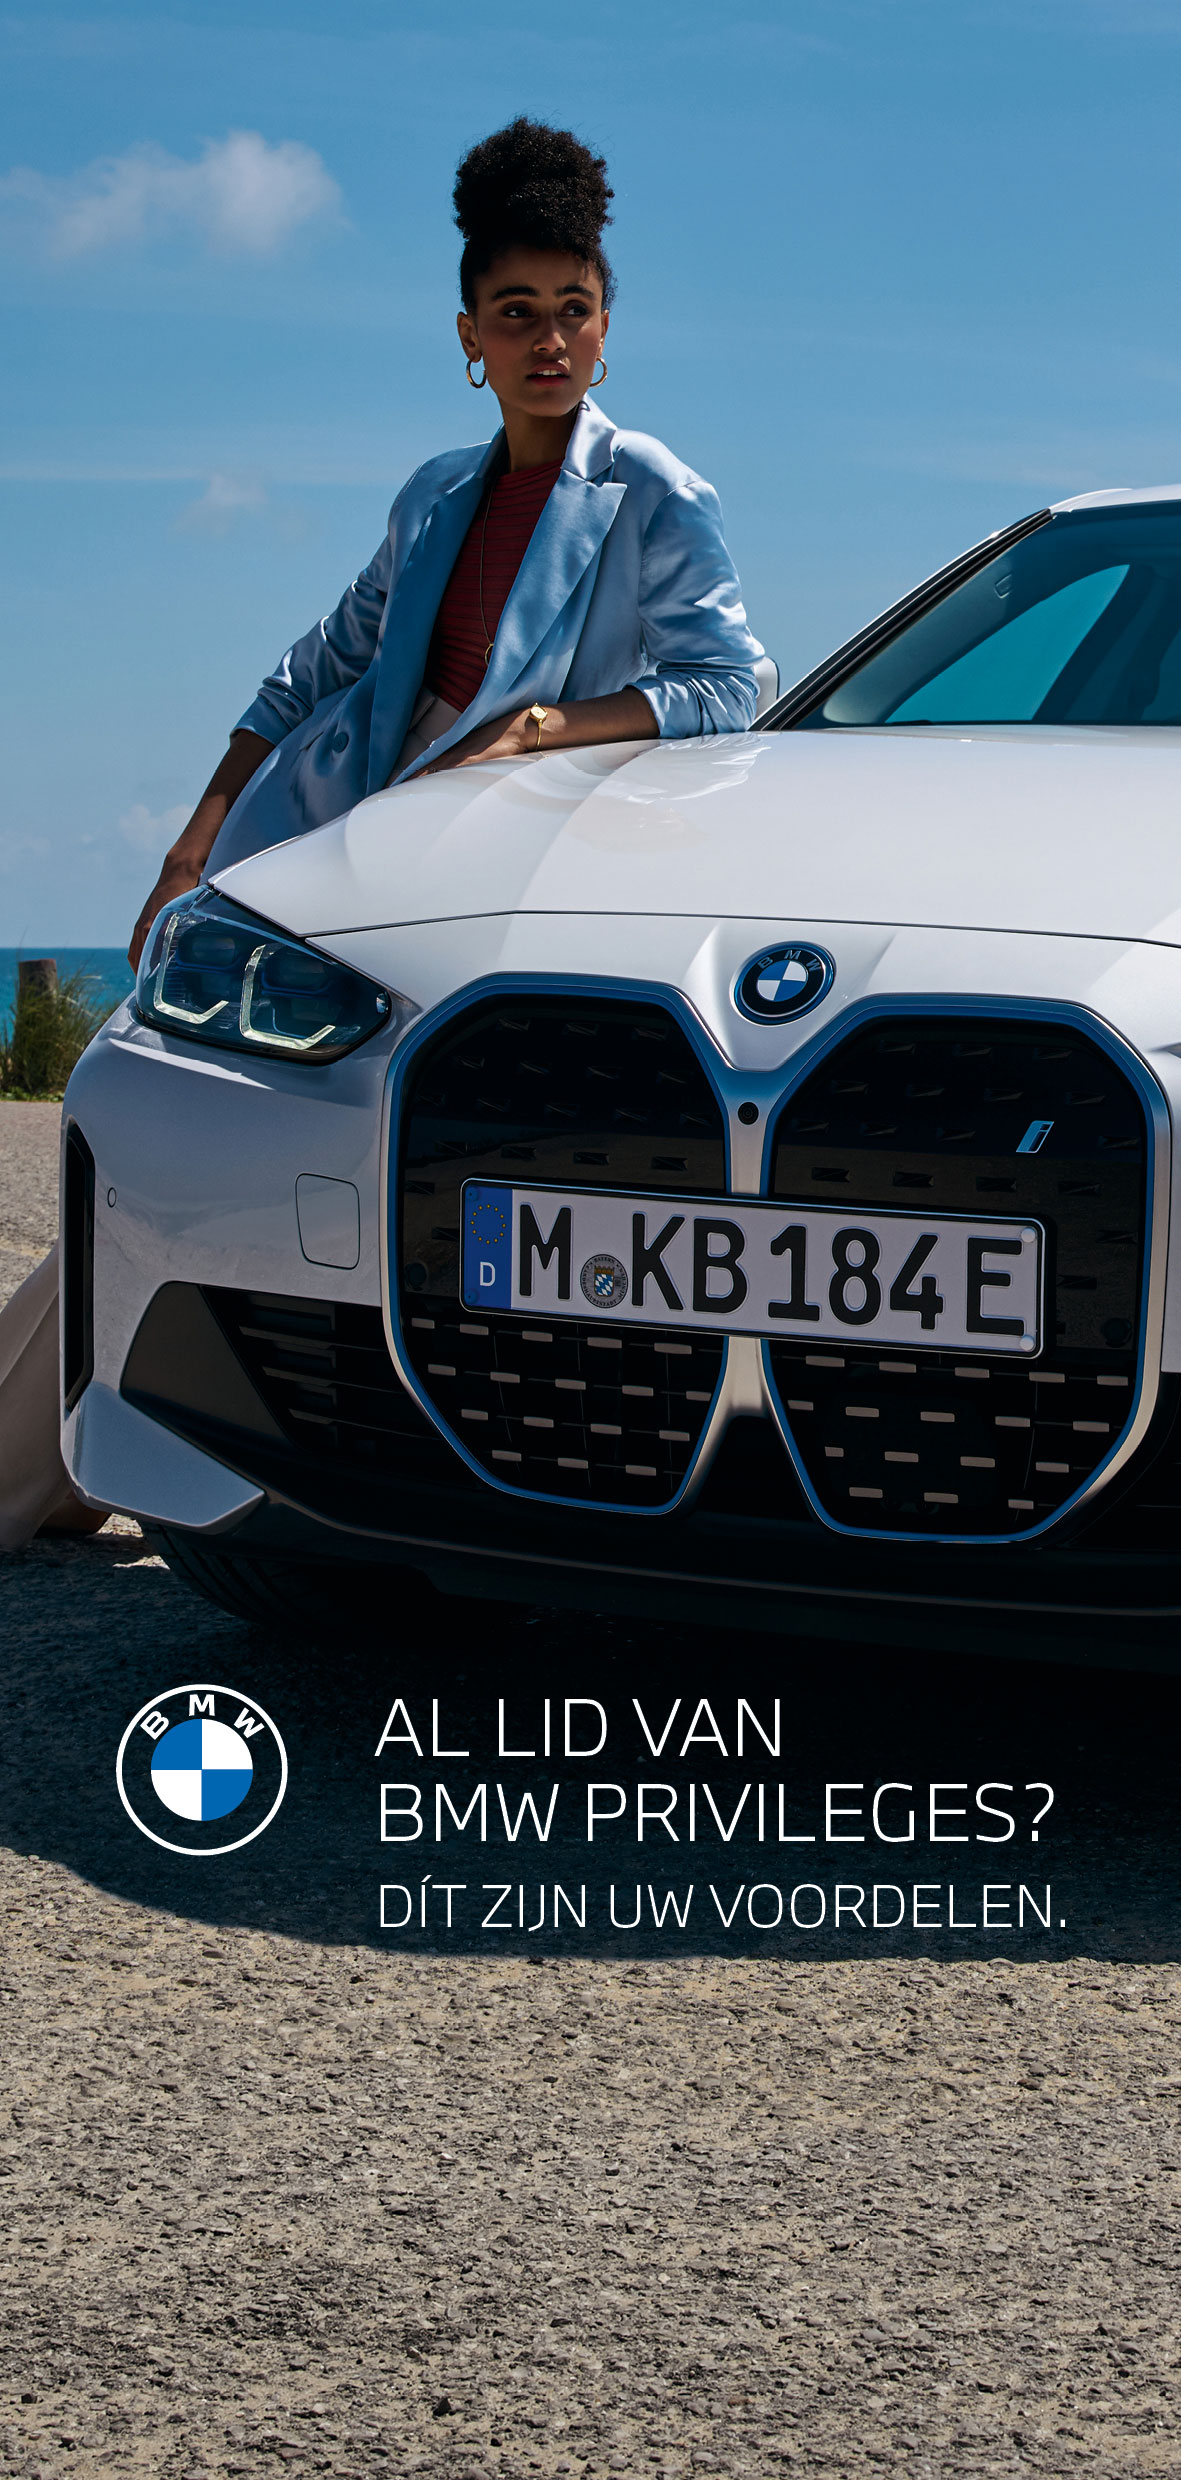 BMW Privileges folder 2020